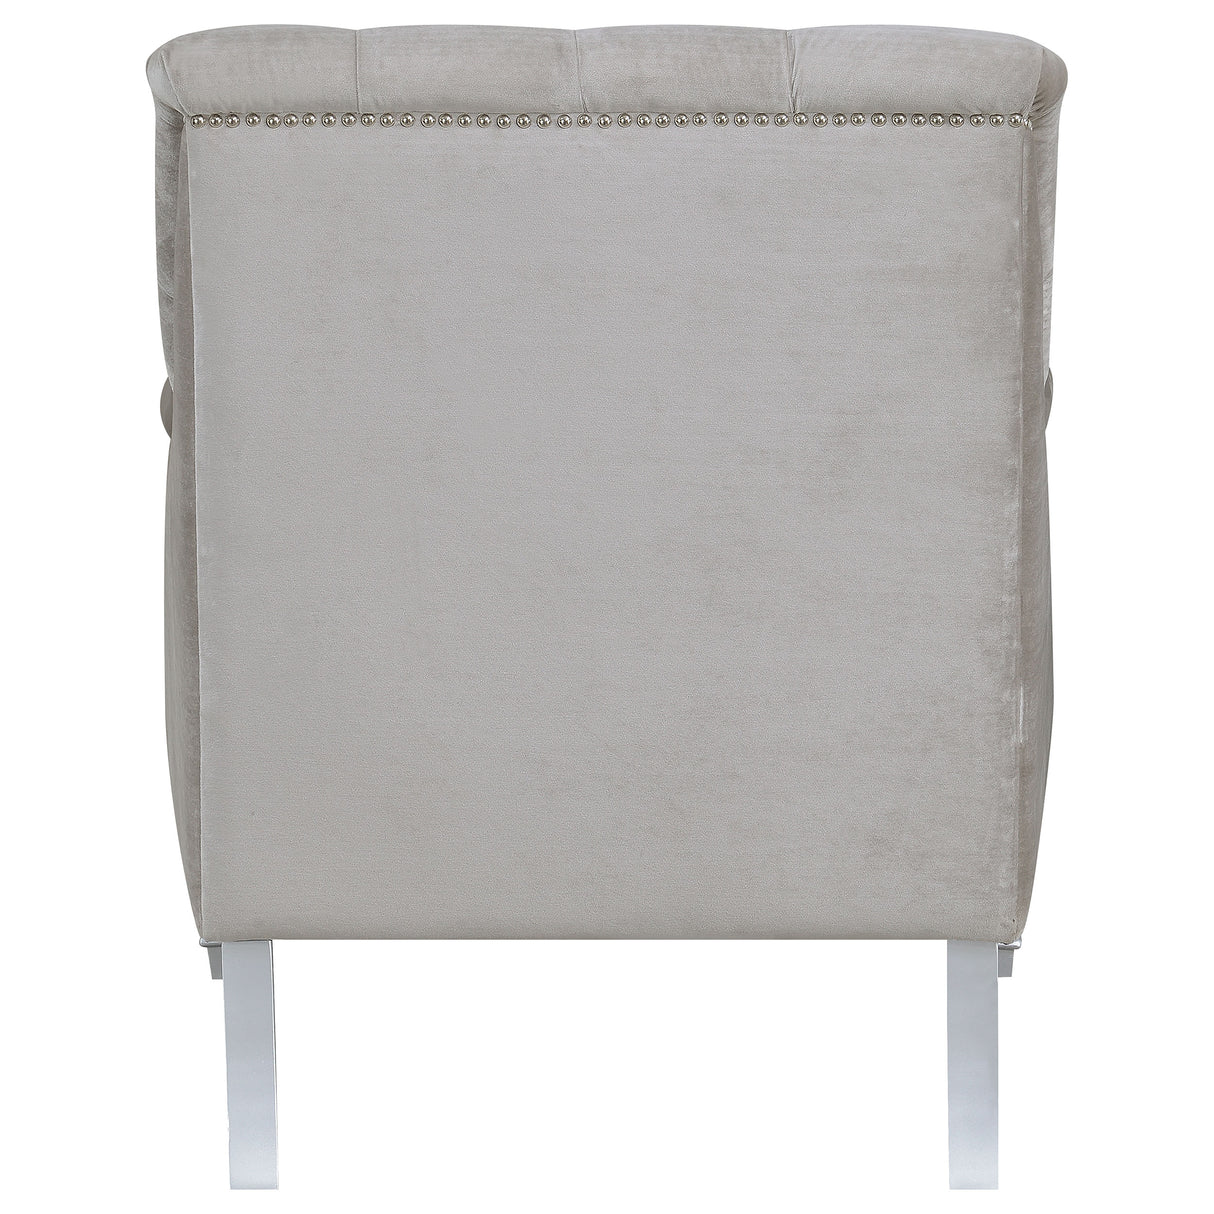 Chair - Avonlea Sloped Arm Tufted Chair Grey